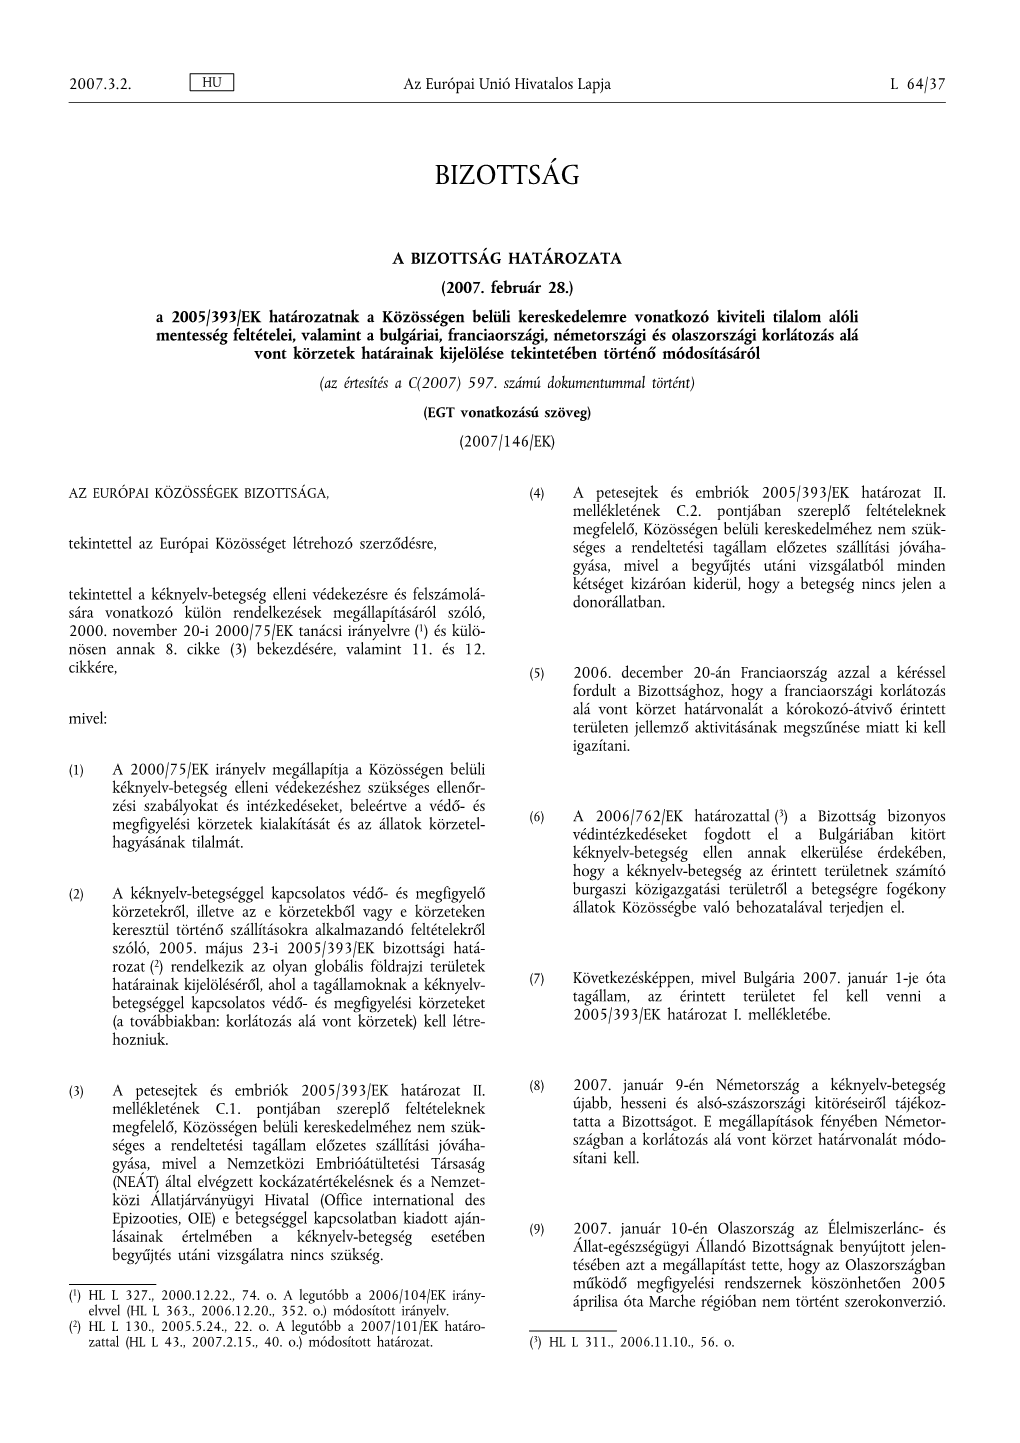 Page 1 2007.3.2. HU Az Európai Unió Hivatalos Lapja L 64/37 BIZO A